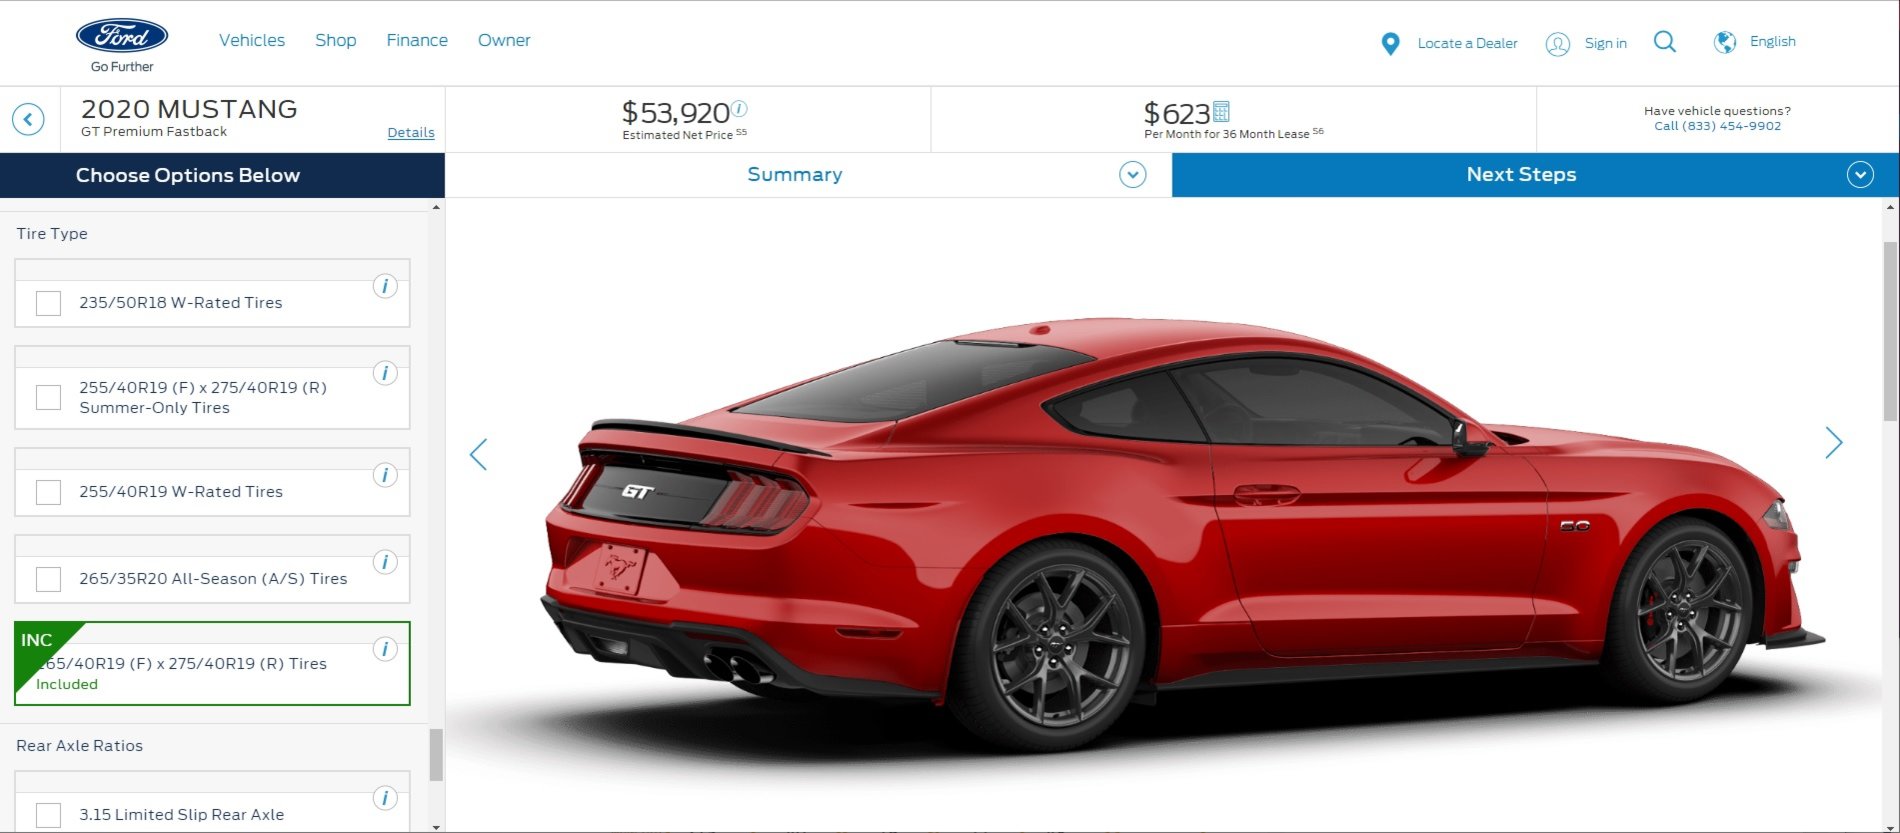 2020 Mustang Build Options.jpg